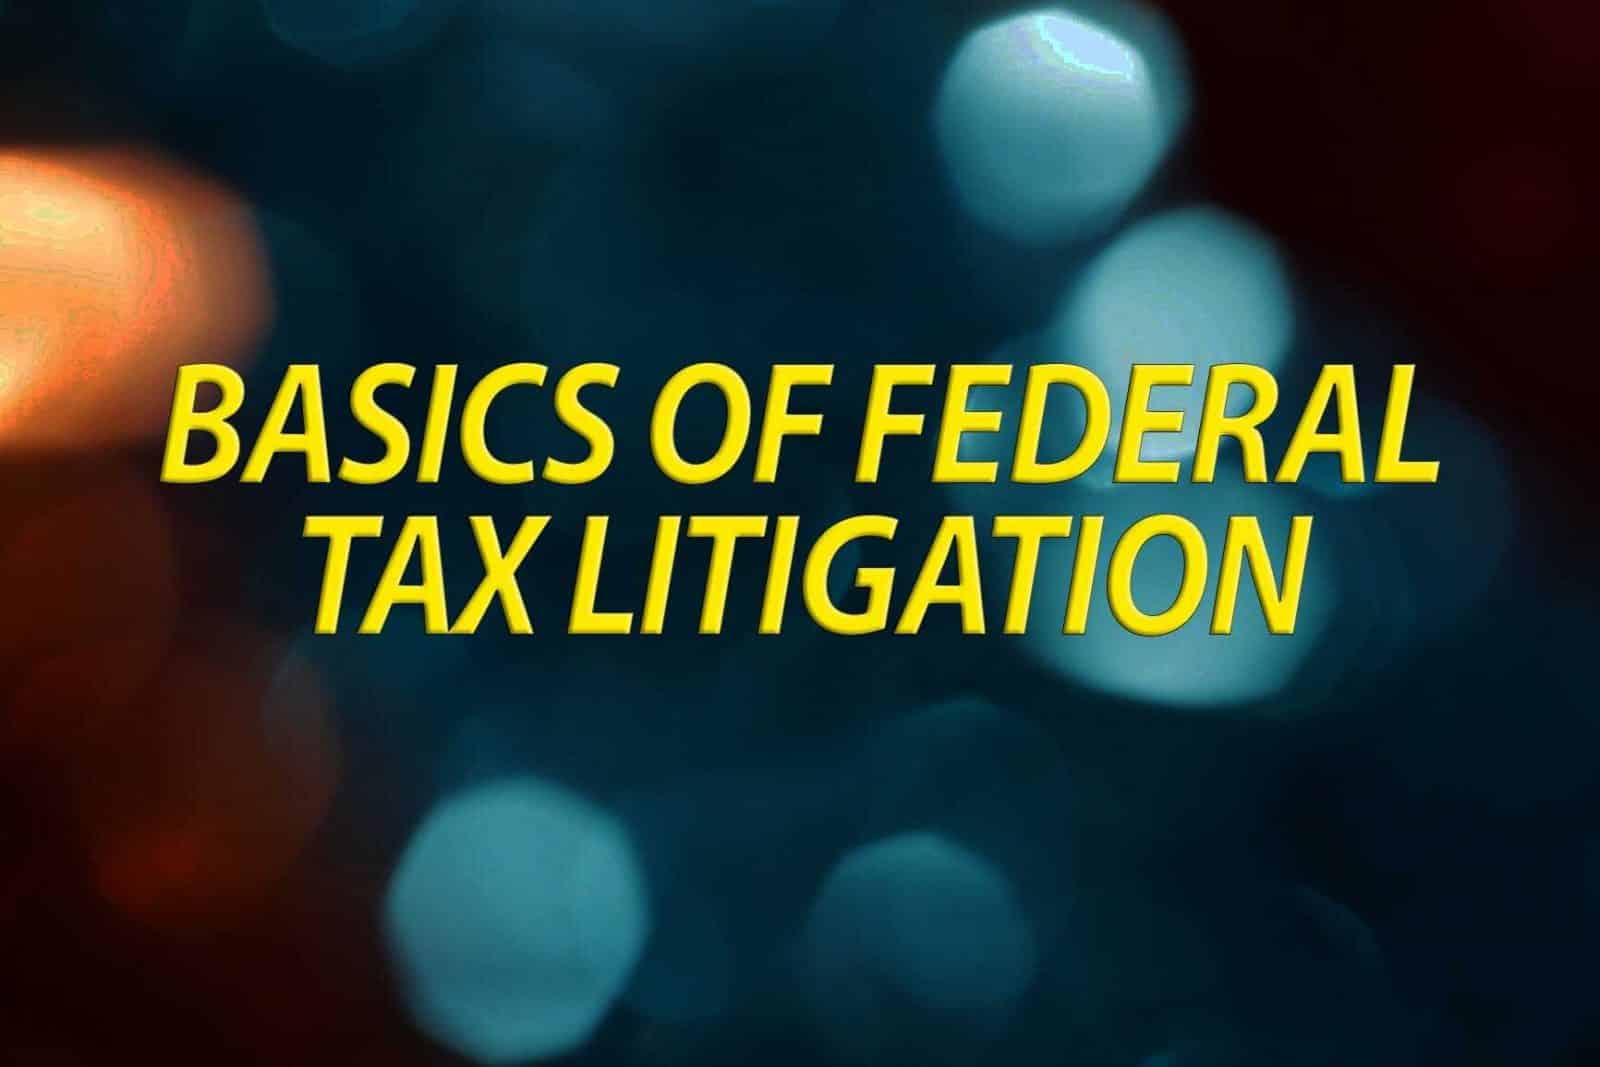 Basics of Federal Tax Litigation